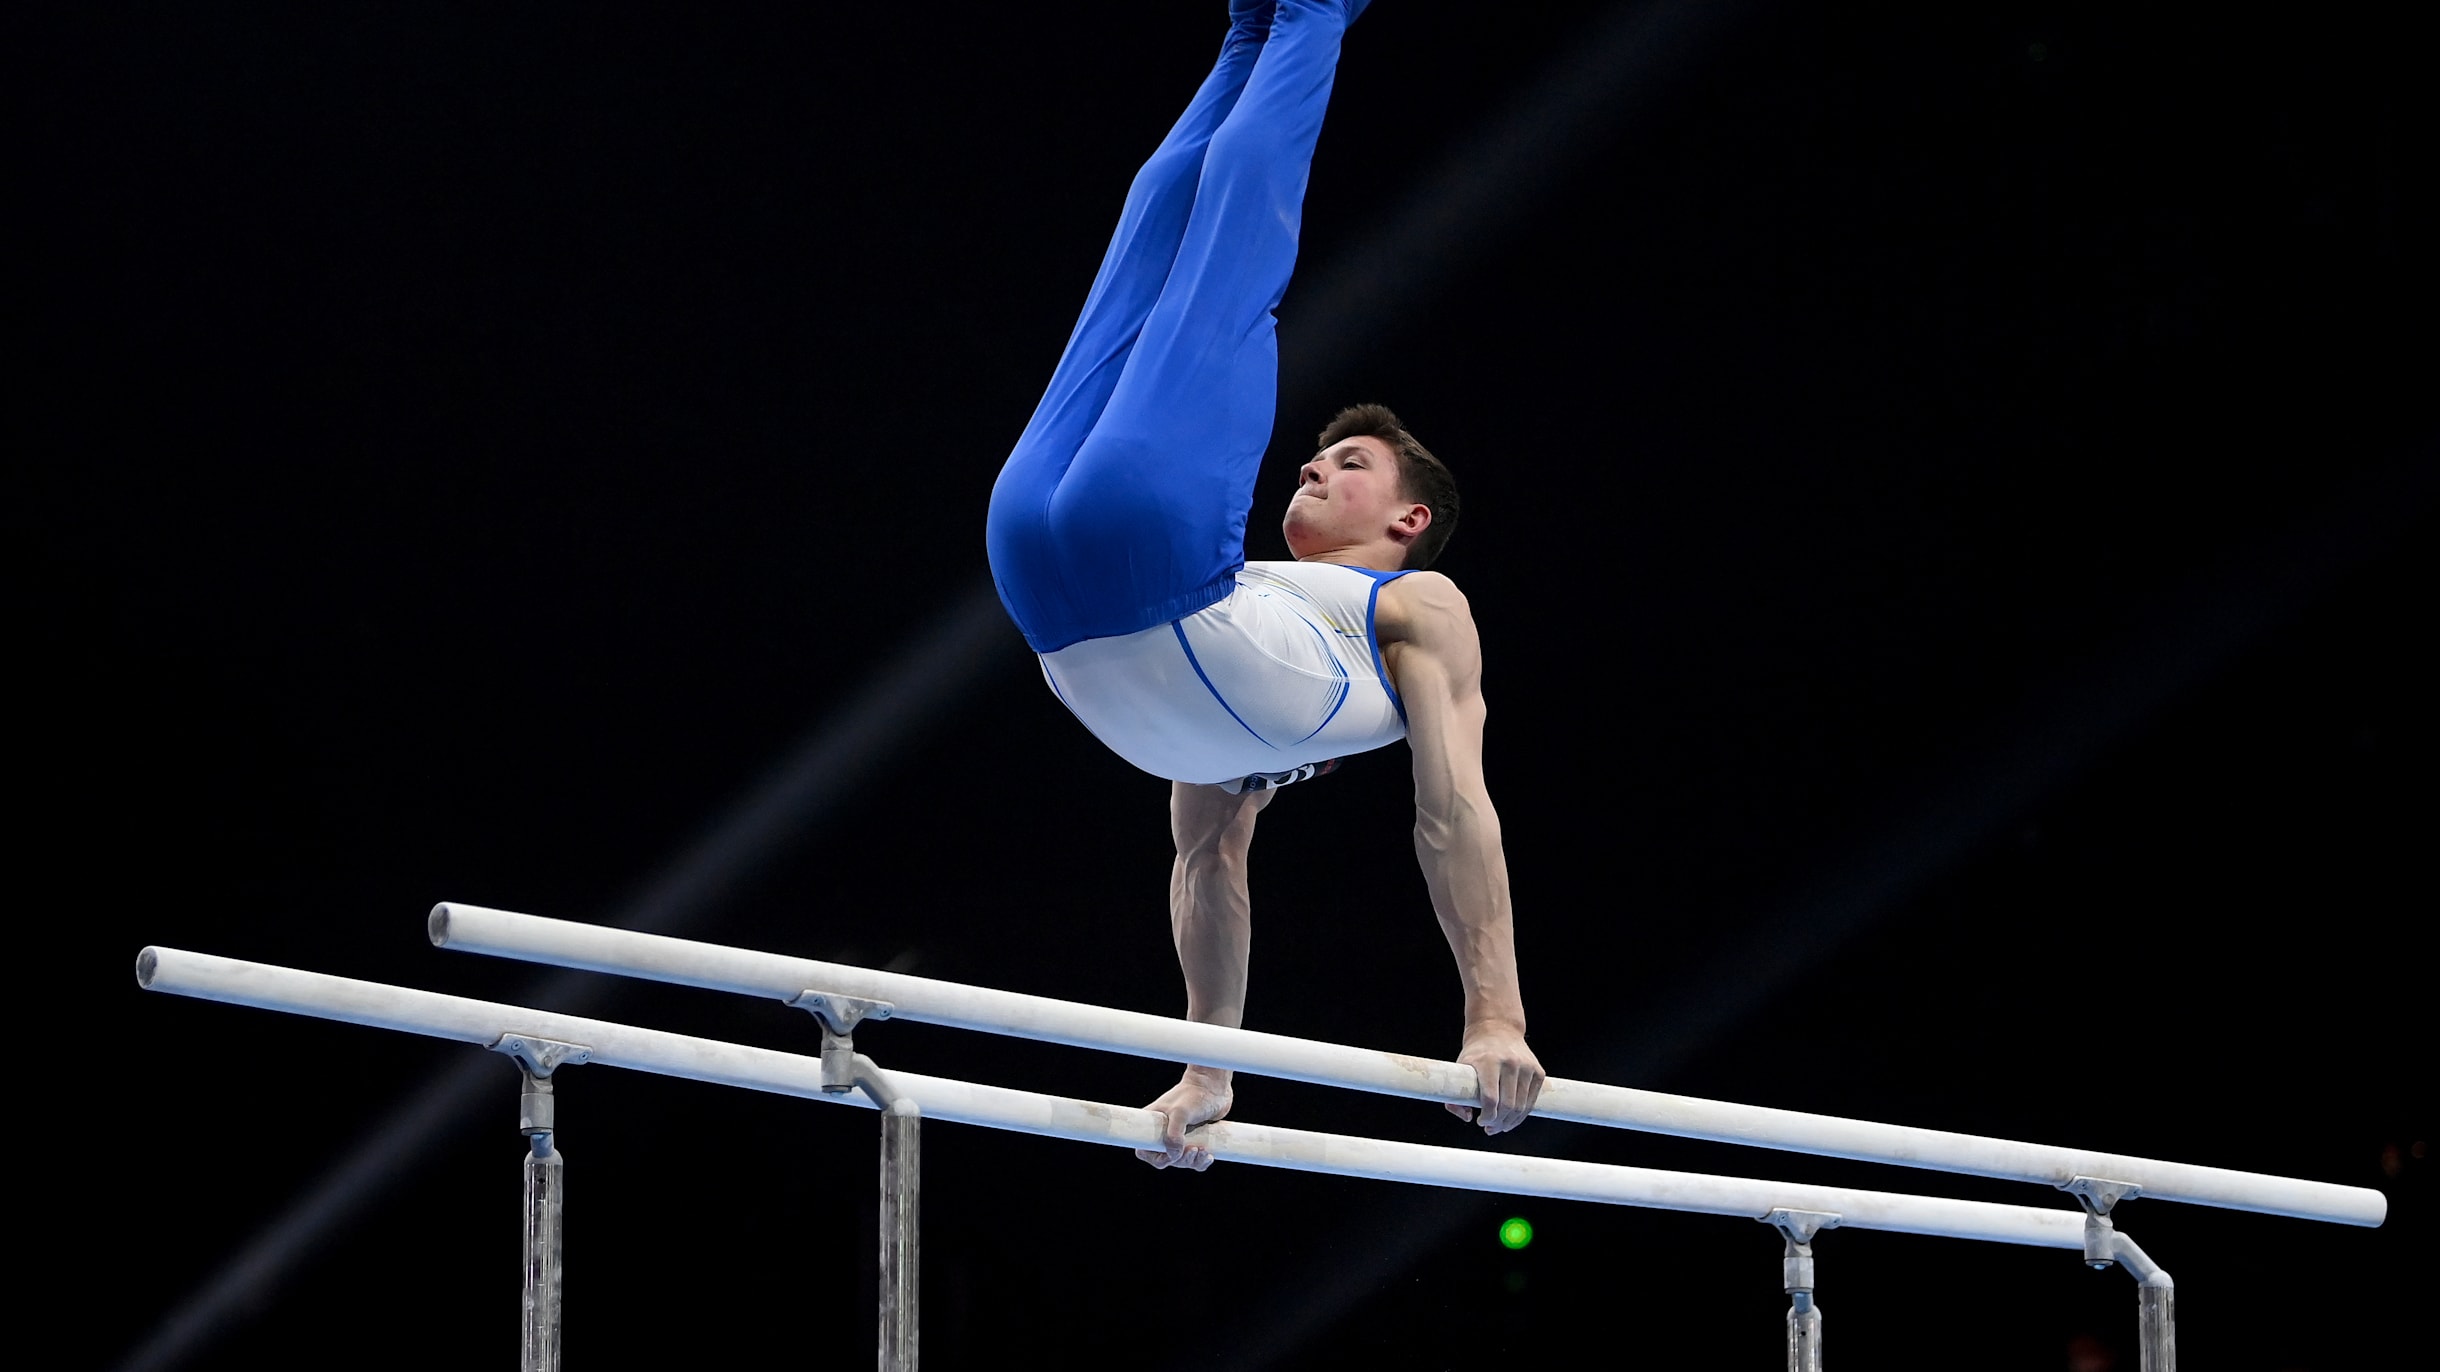 How Ukrainian gymnasts live the power of sport